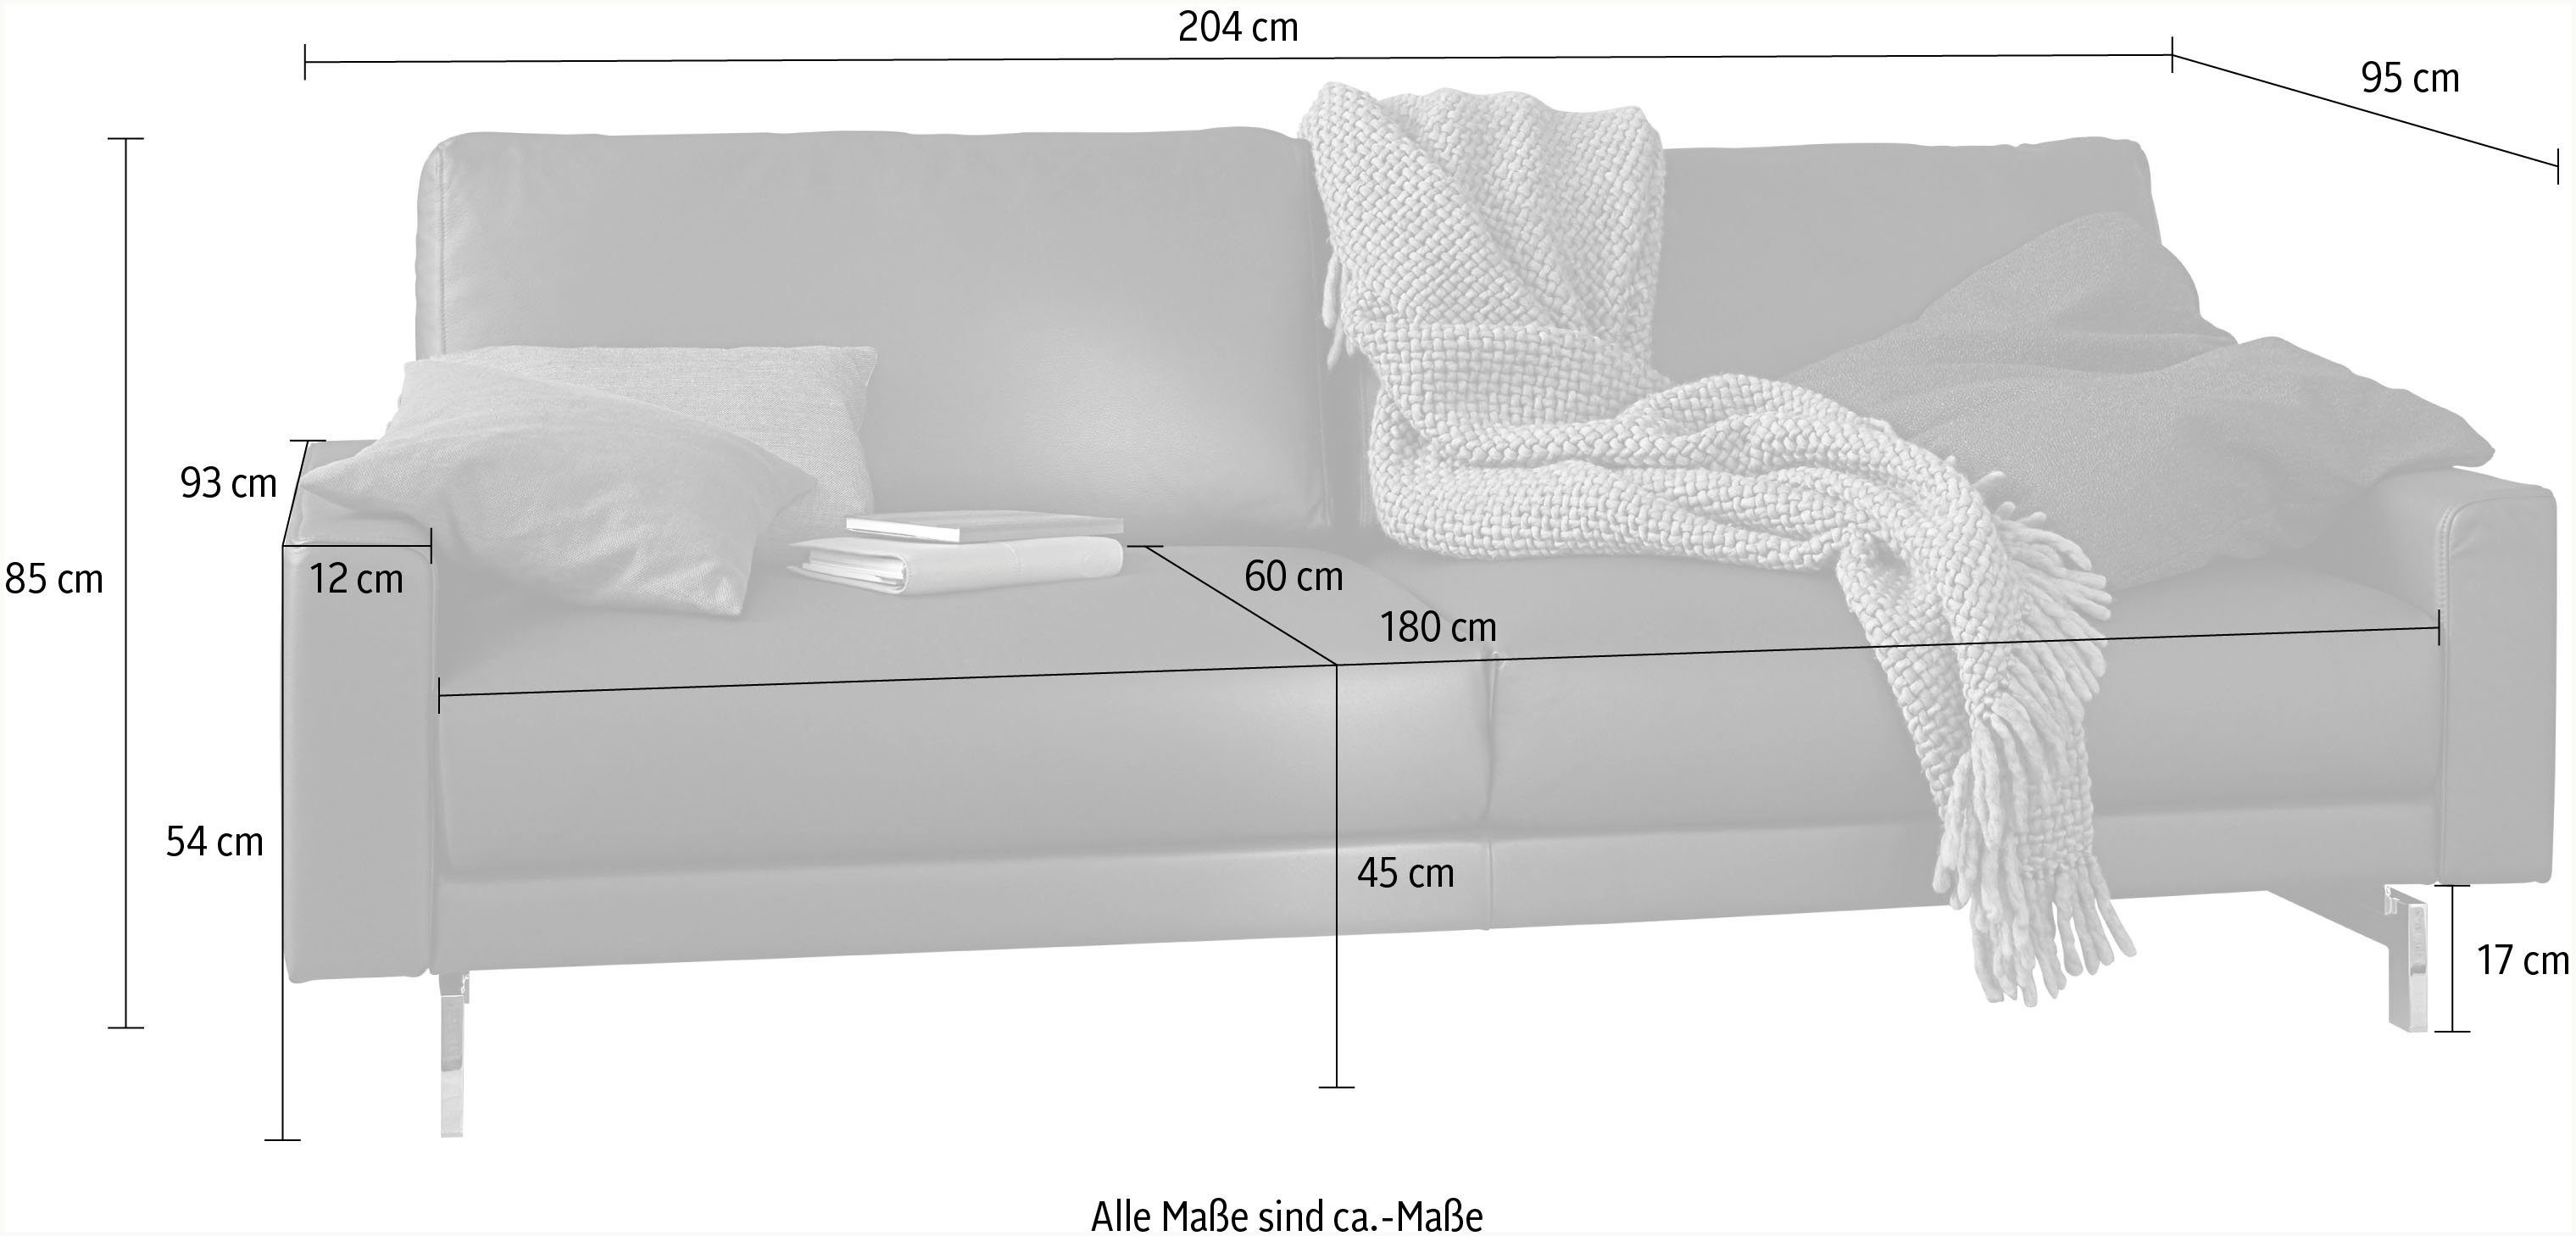 Breite niedrig, chromfarben 3-Sitzer Armlehne cm Fuß hs.450, hülsta sofa glänzend, 204